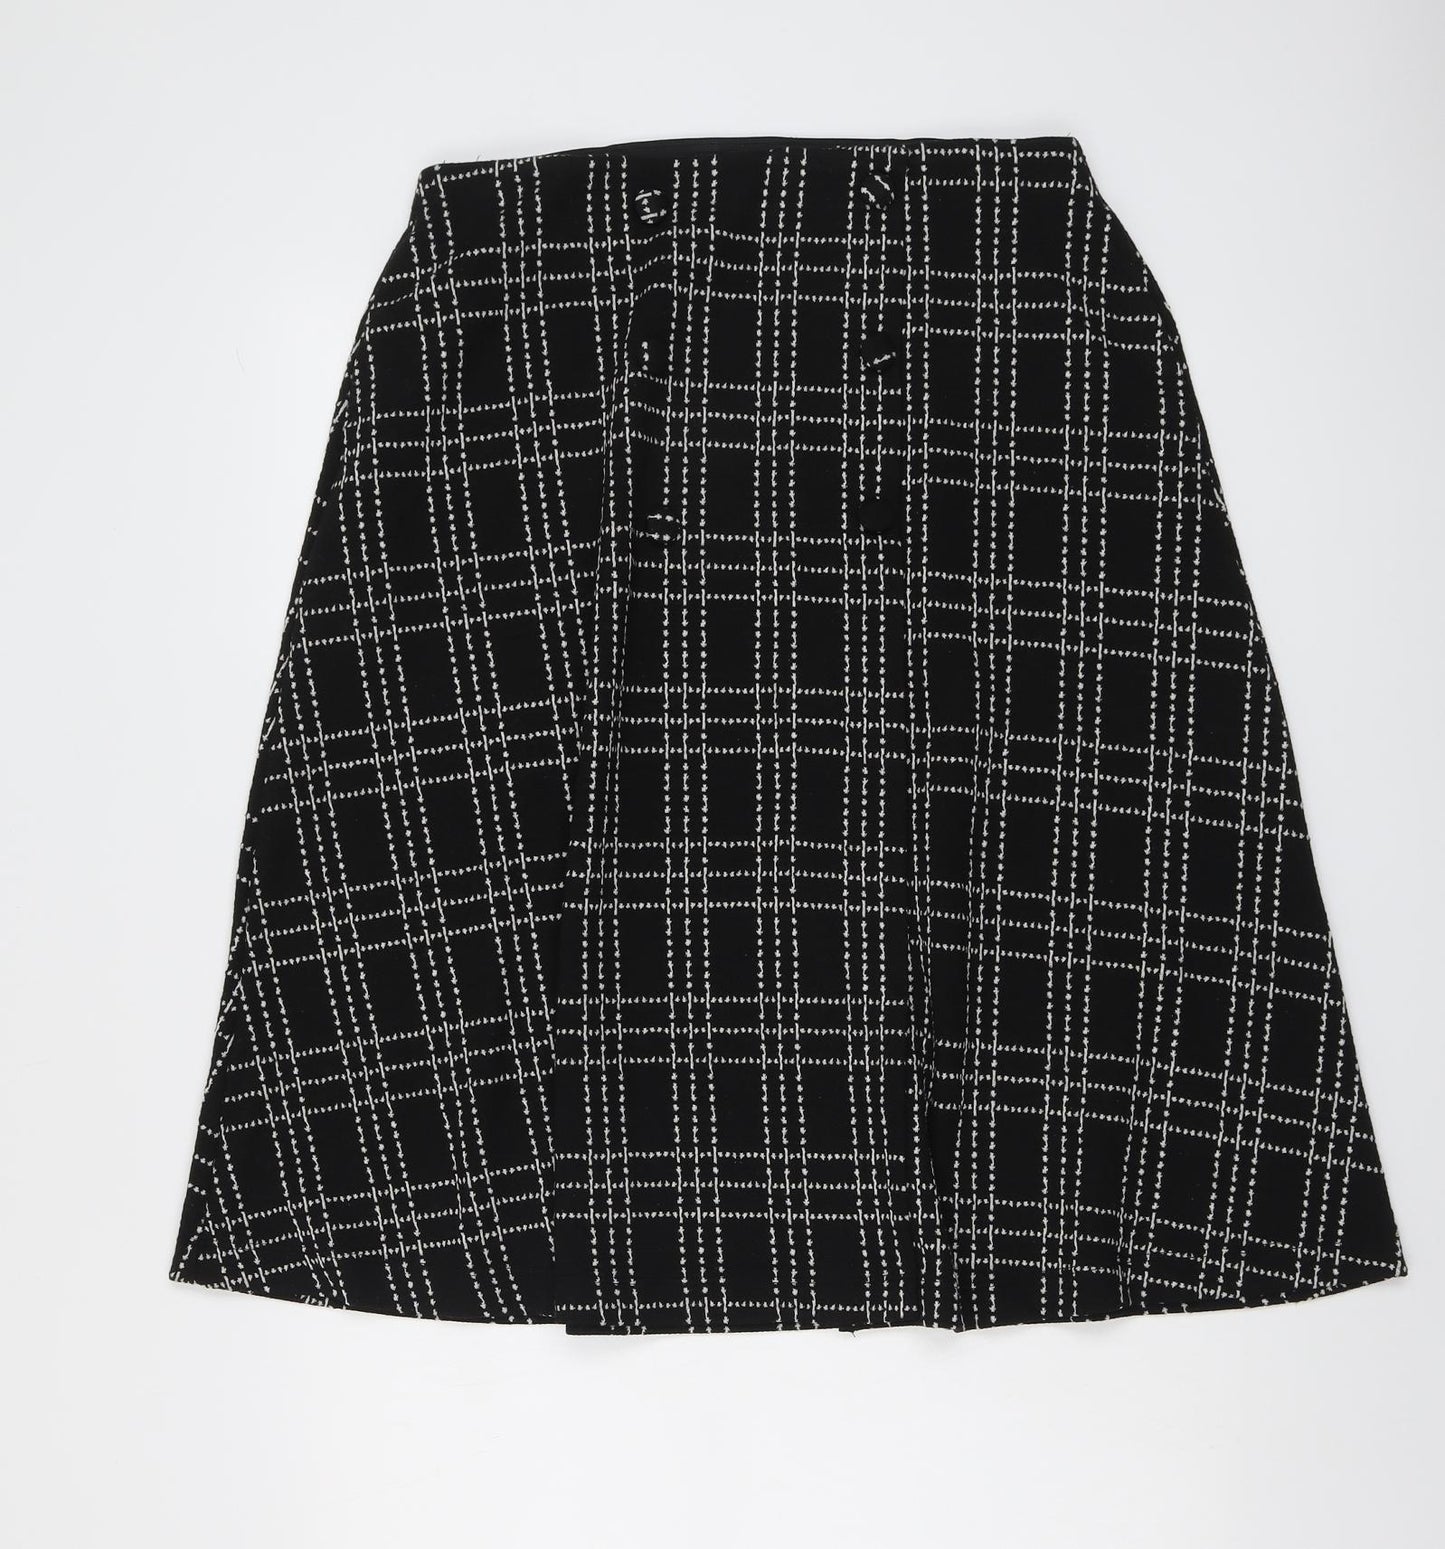 NEXT Womens Black Plaid Polyester A-Line Skirt Size 14